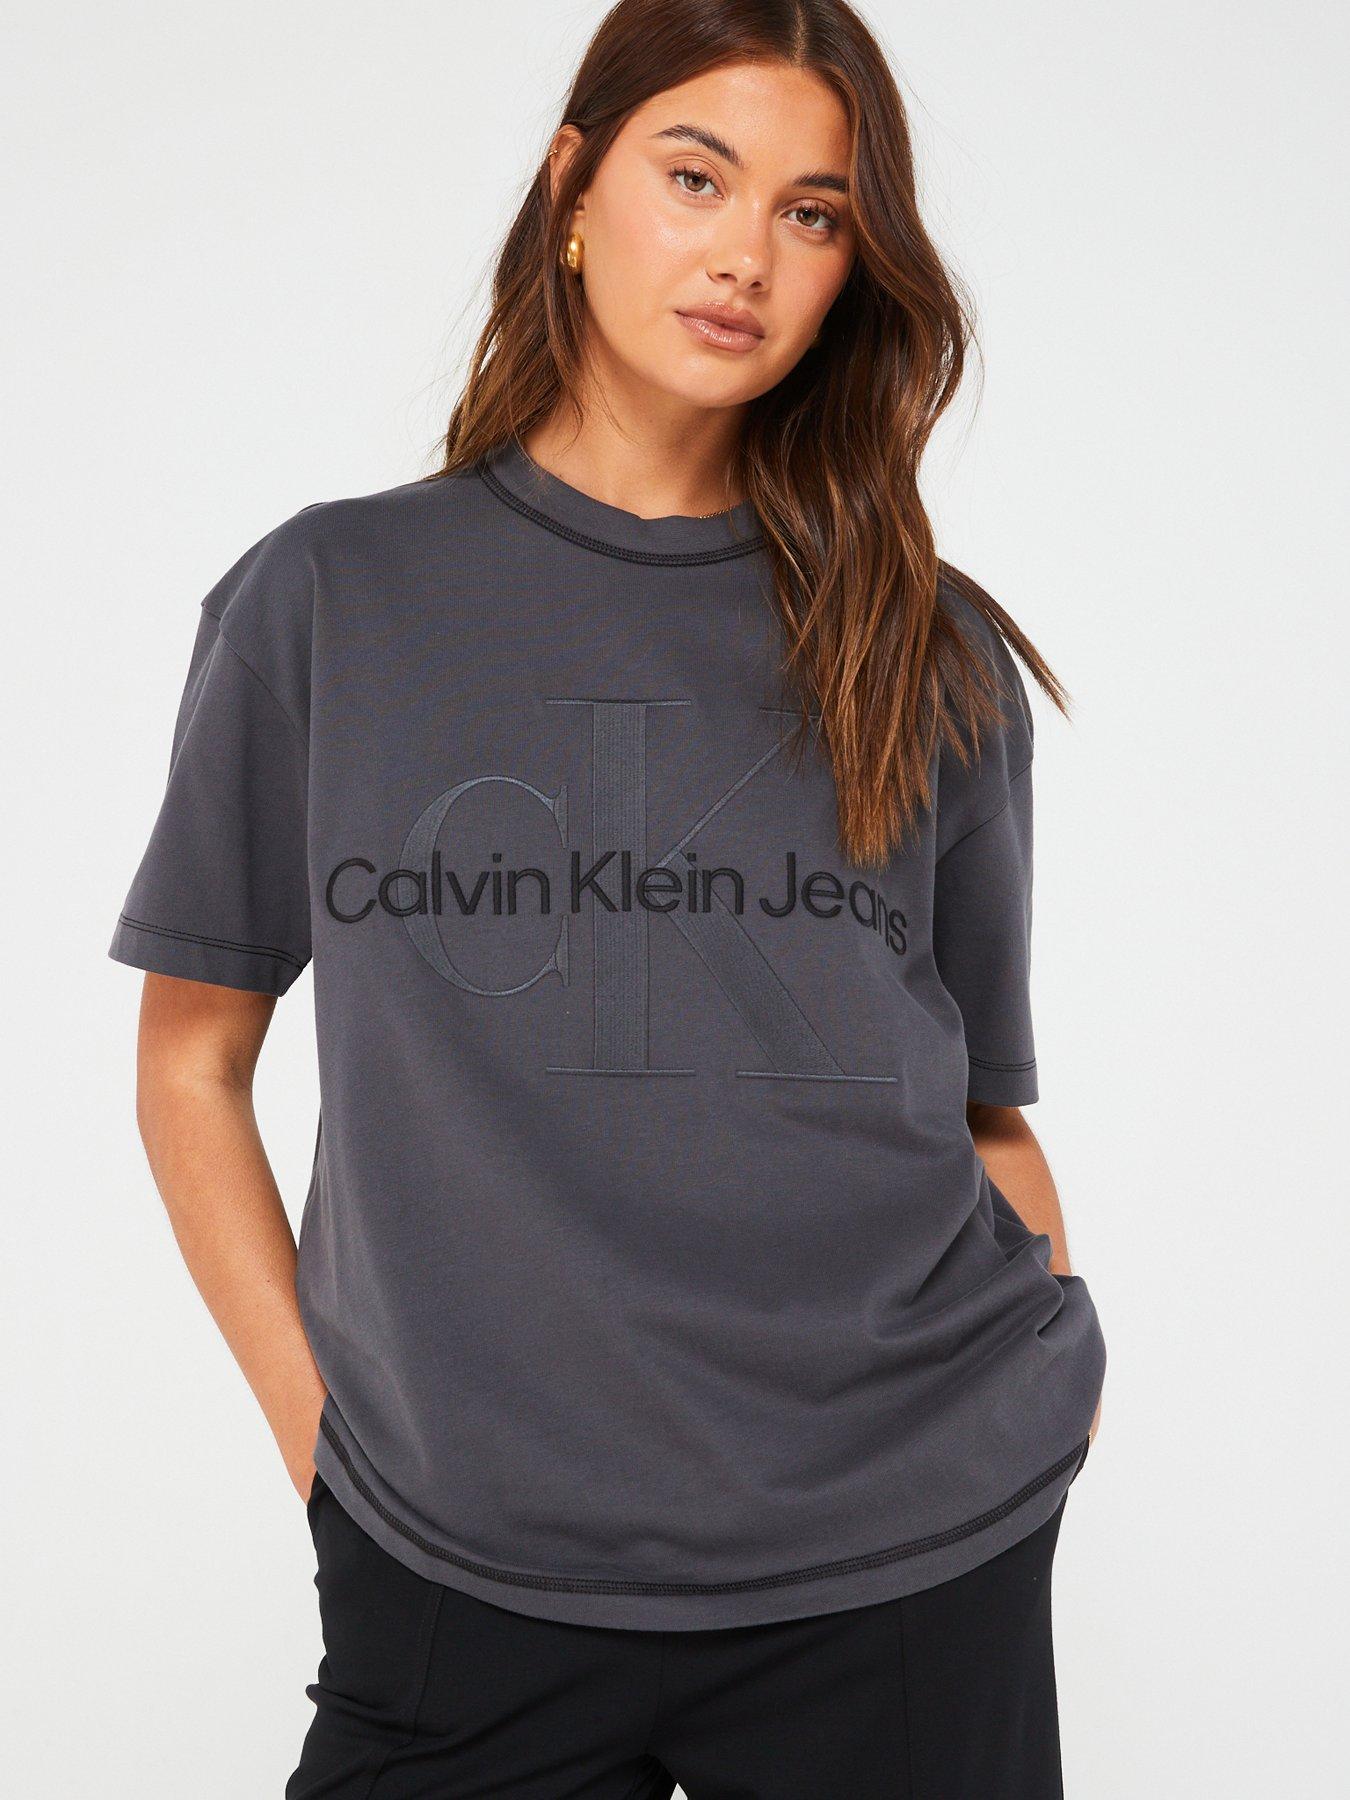 L, Calvin klein jeans, Tops & t-shirts, Women